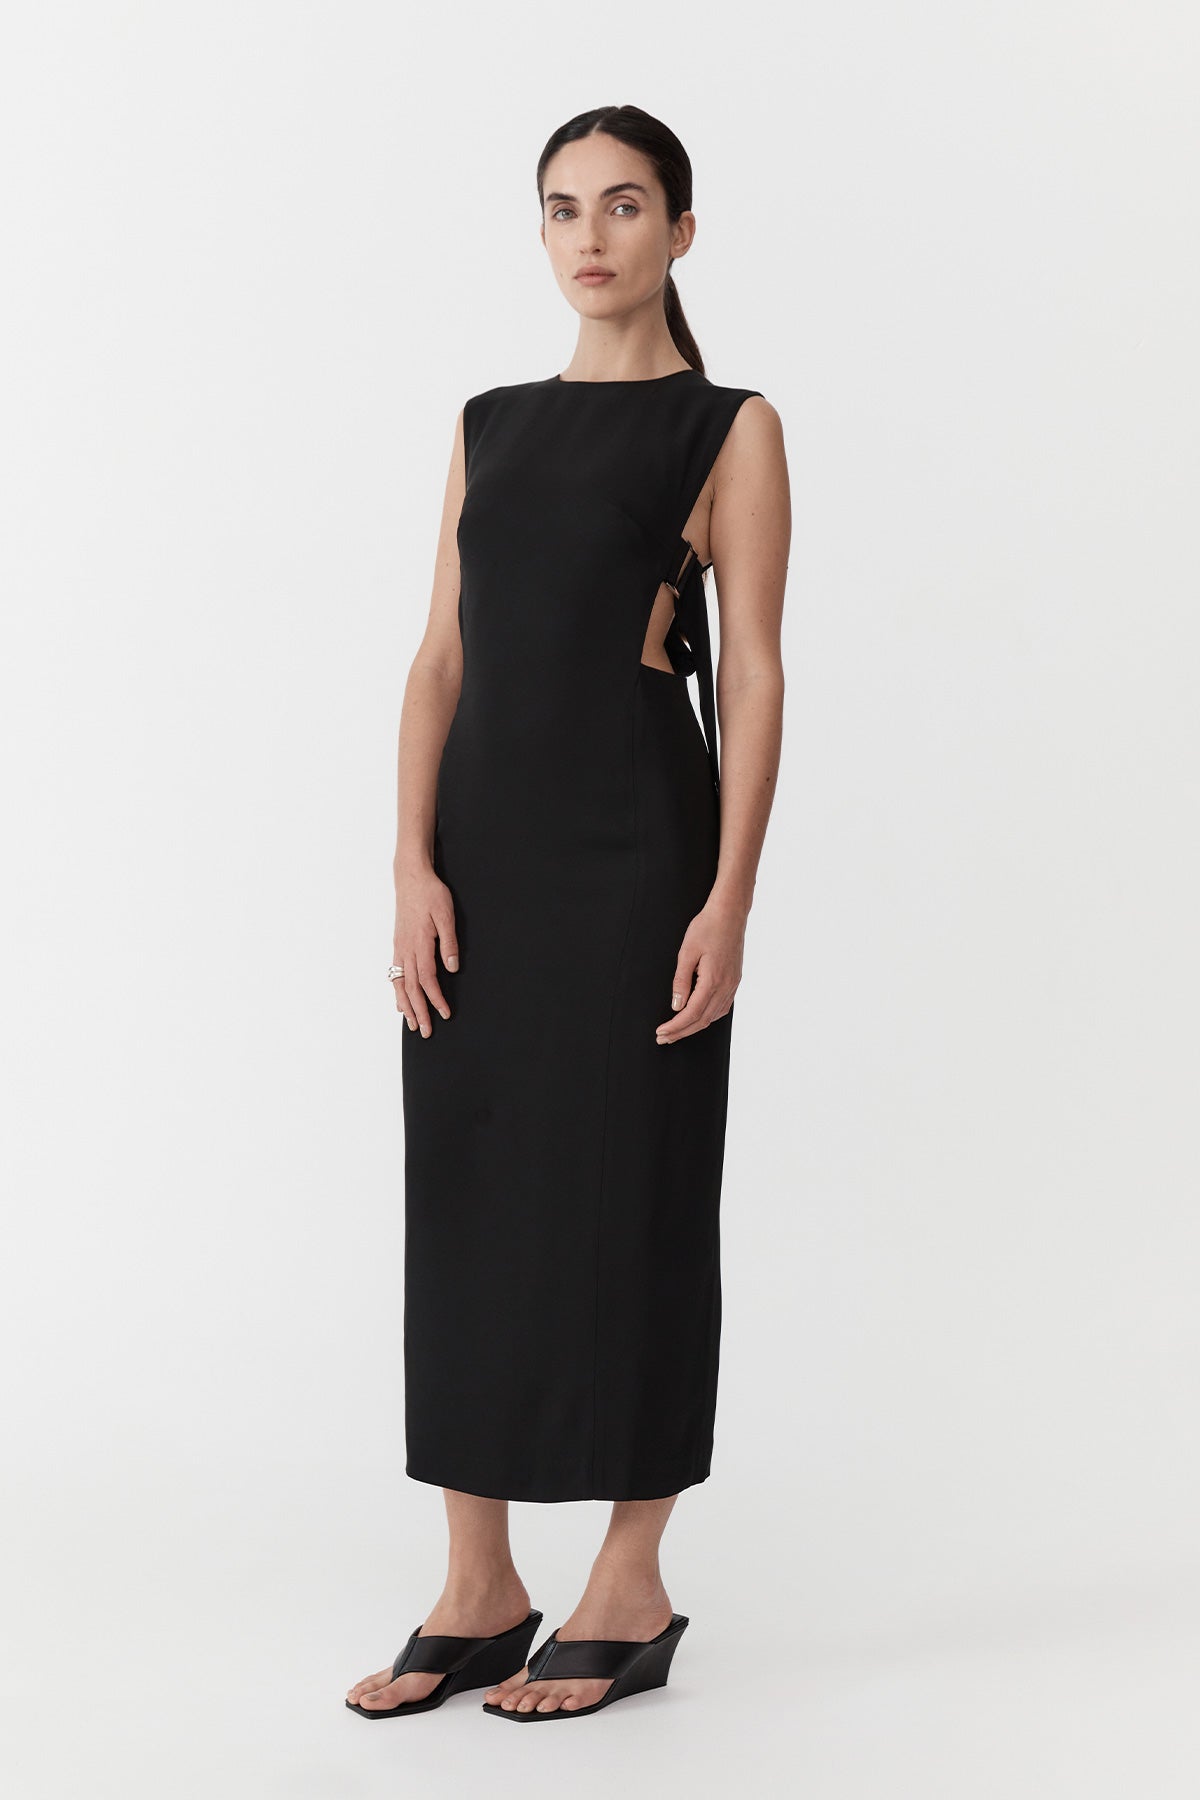 St. Agni | Classic Side Detail Dress - Black